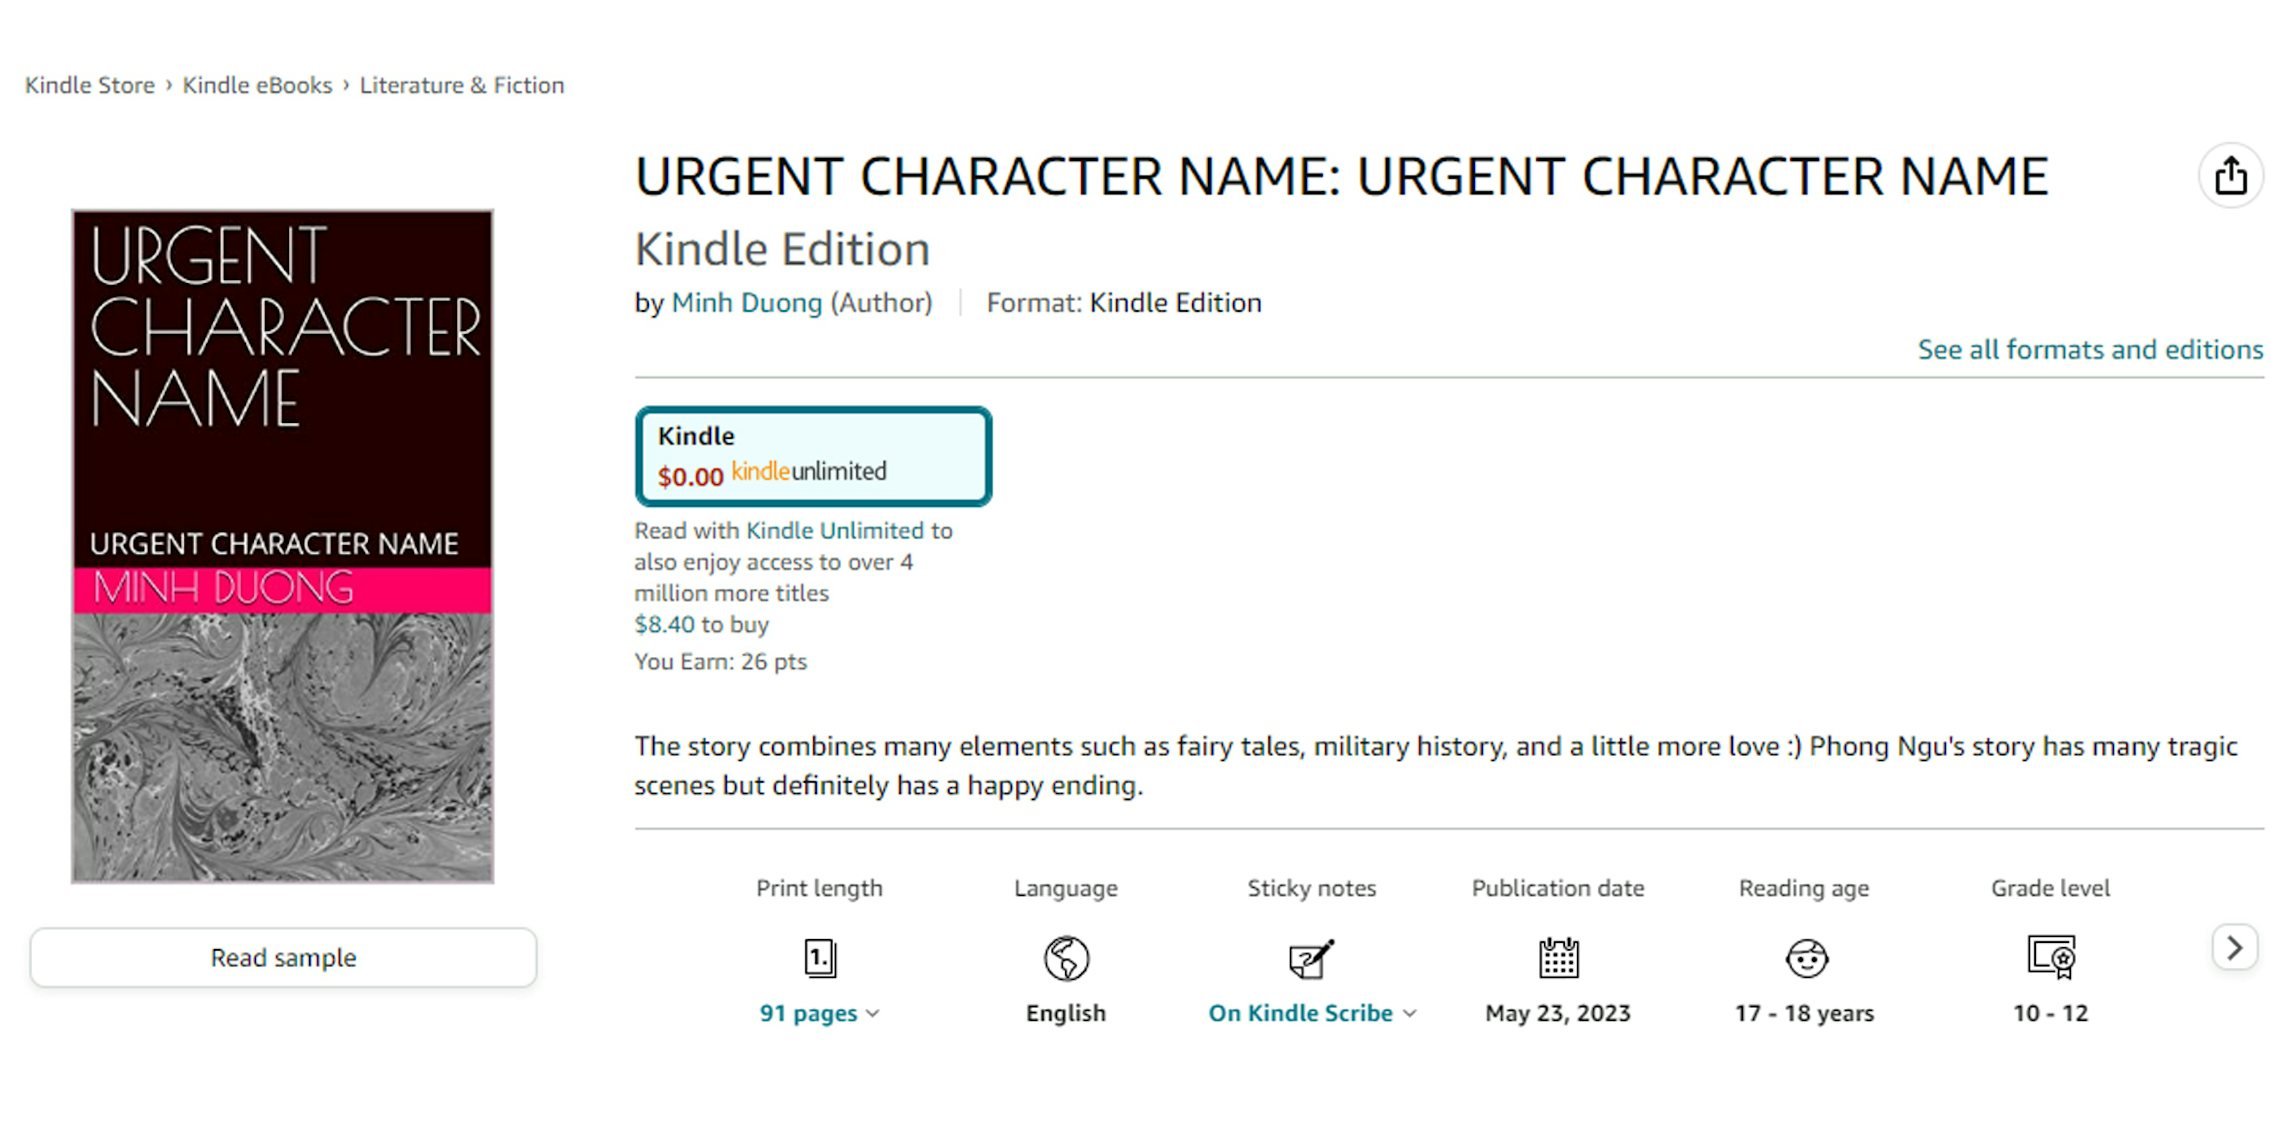 Amazon Kindle eBook listing 'URGENT CHARACTER NAME: URGENT CHARACTER NAME' with image of book cover